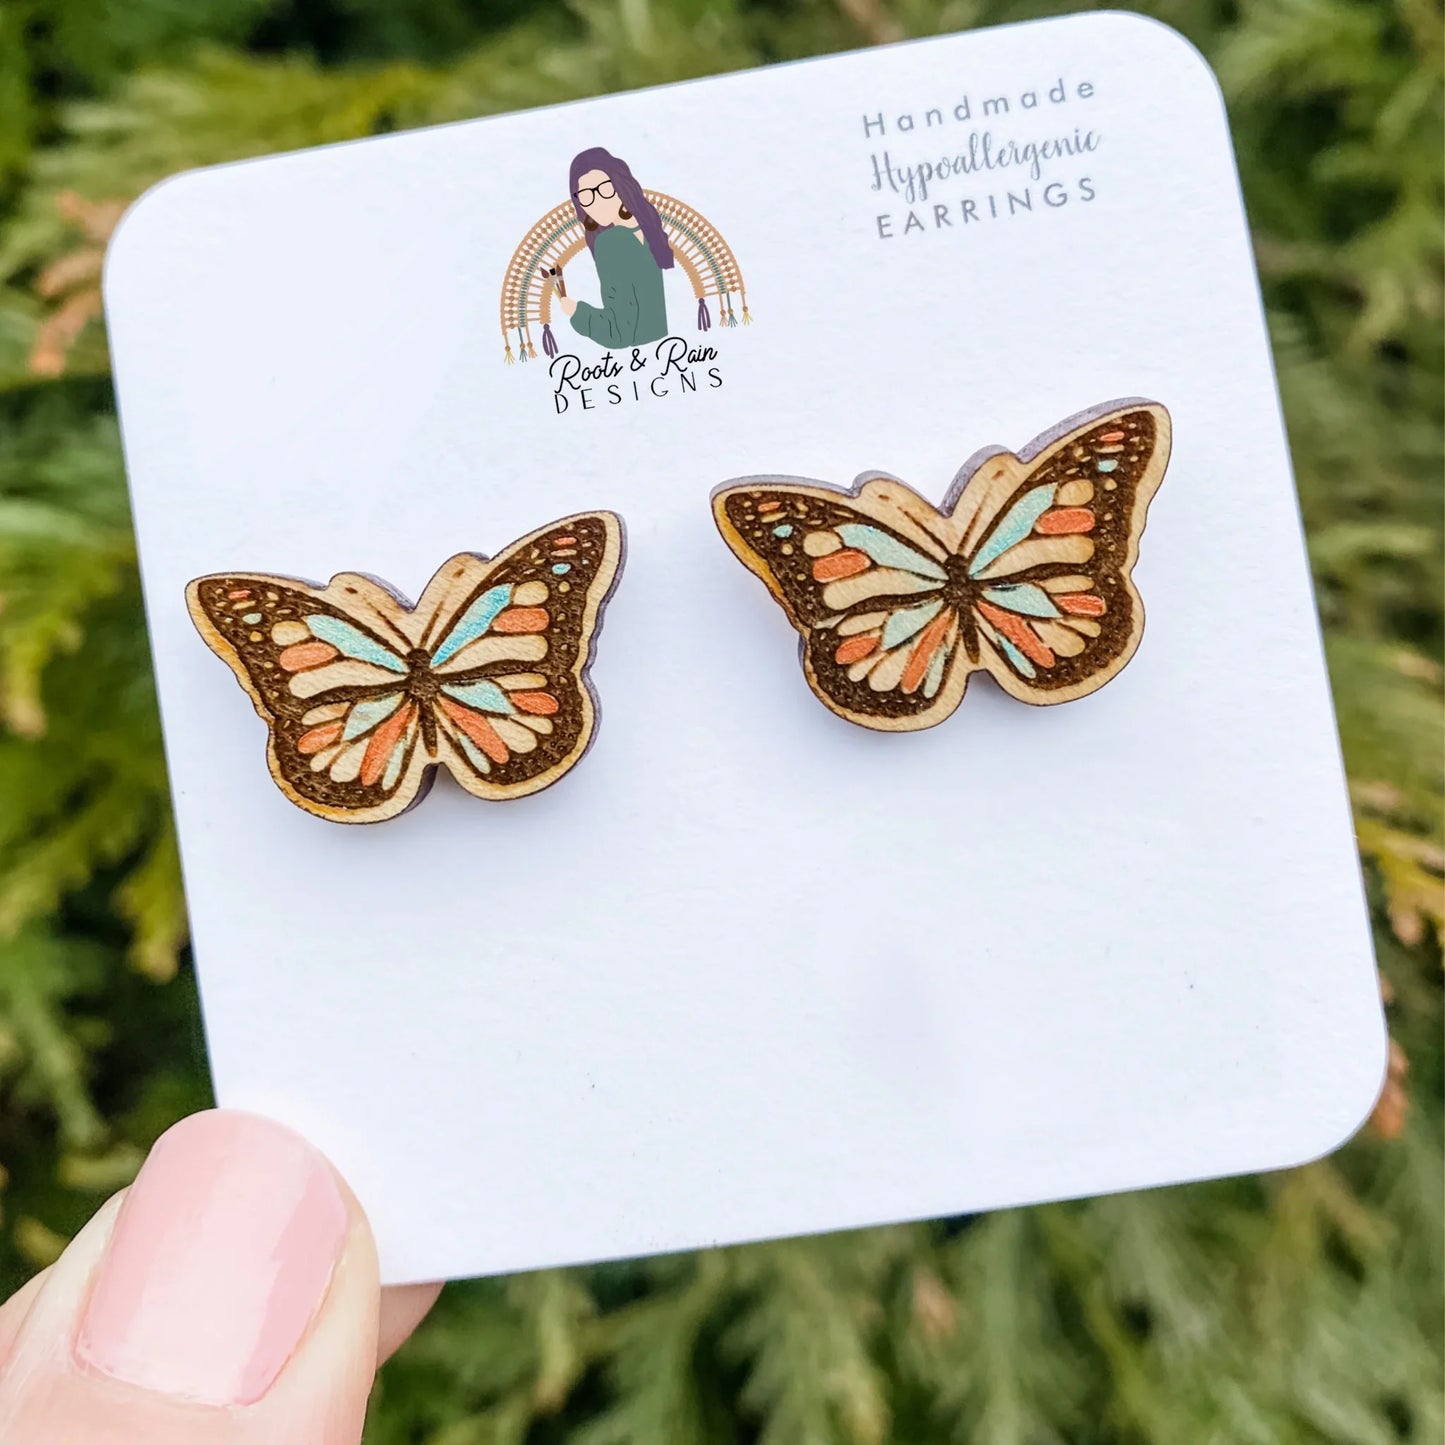 Butterfly studs